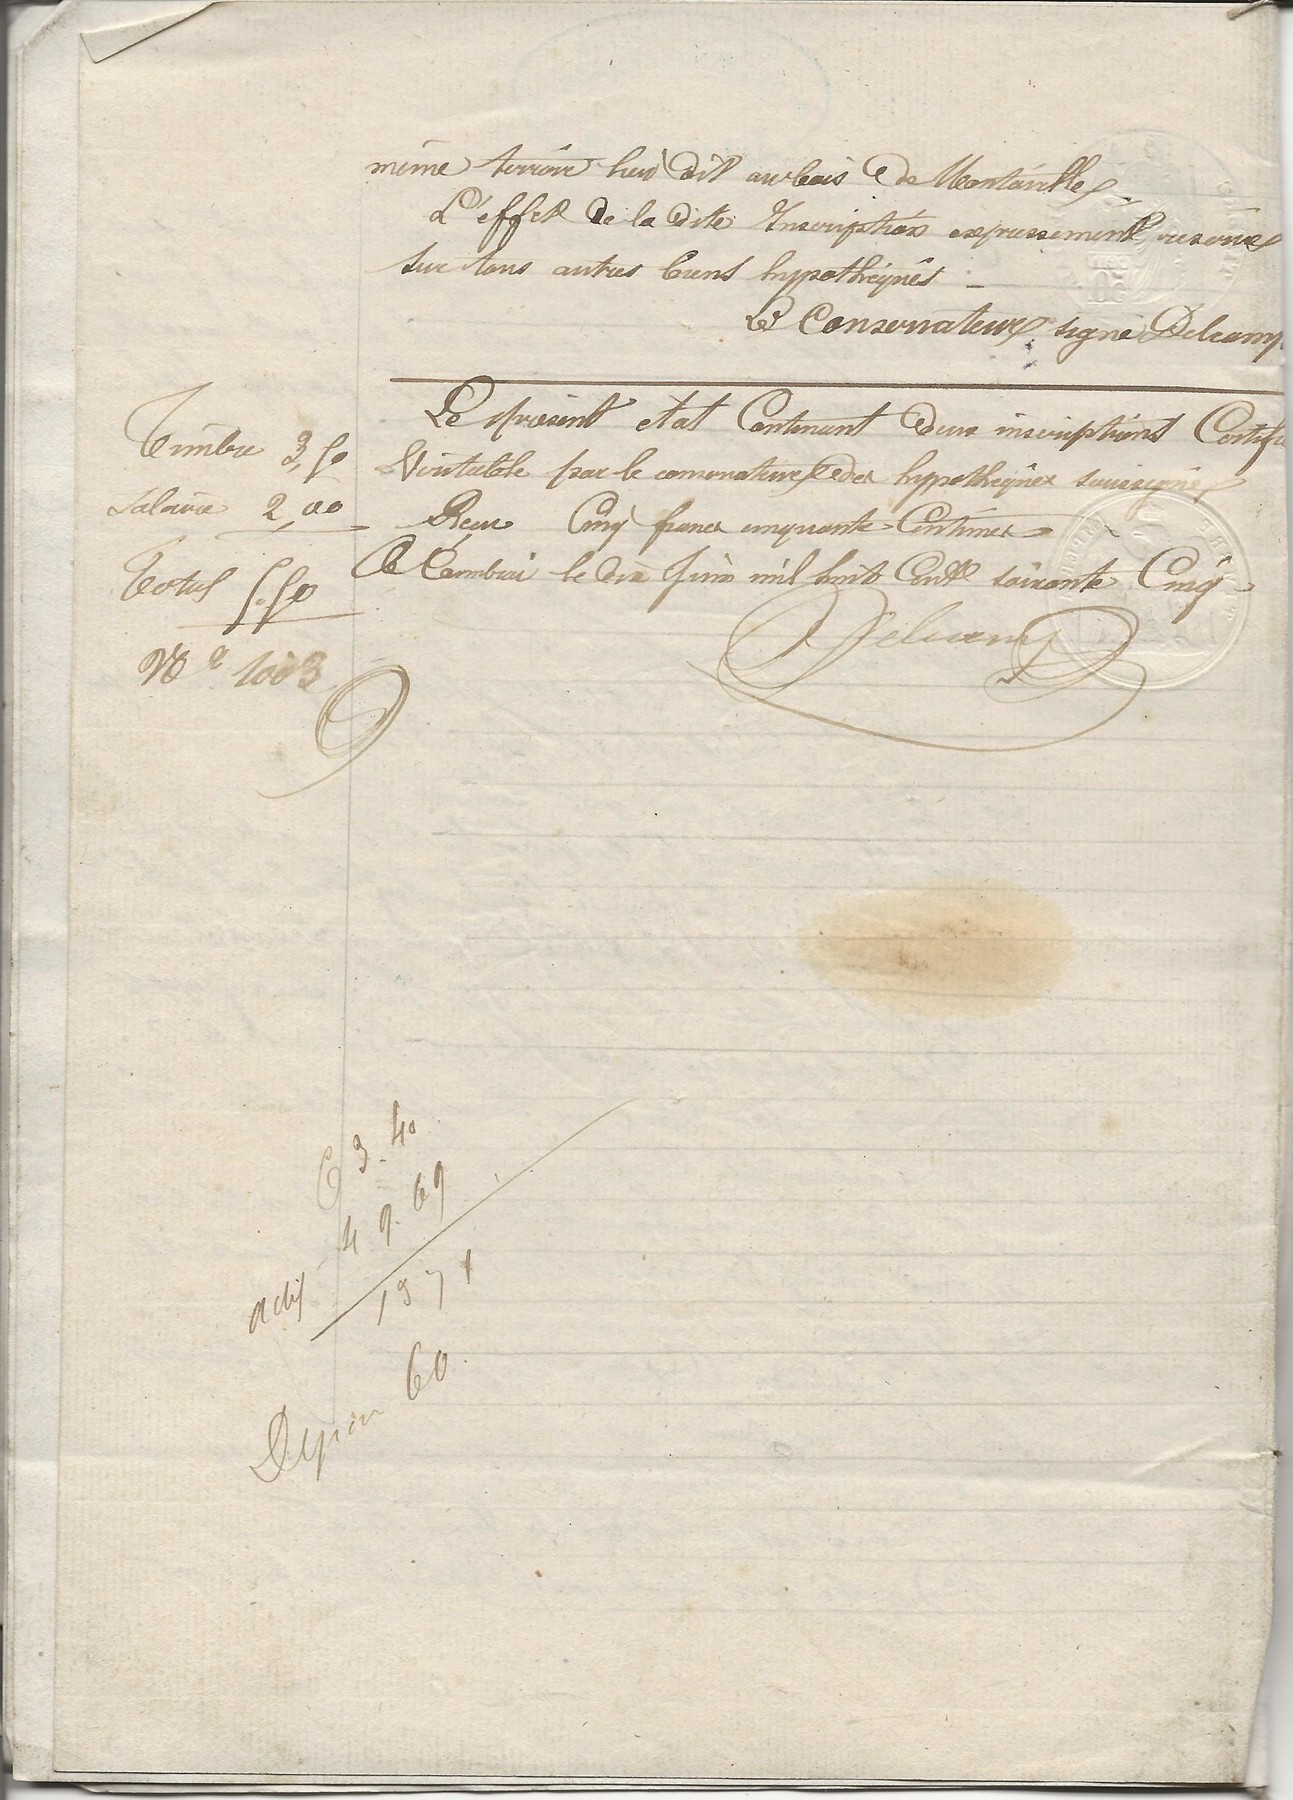 1863 document hypothecaire basquin 001 7 